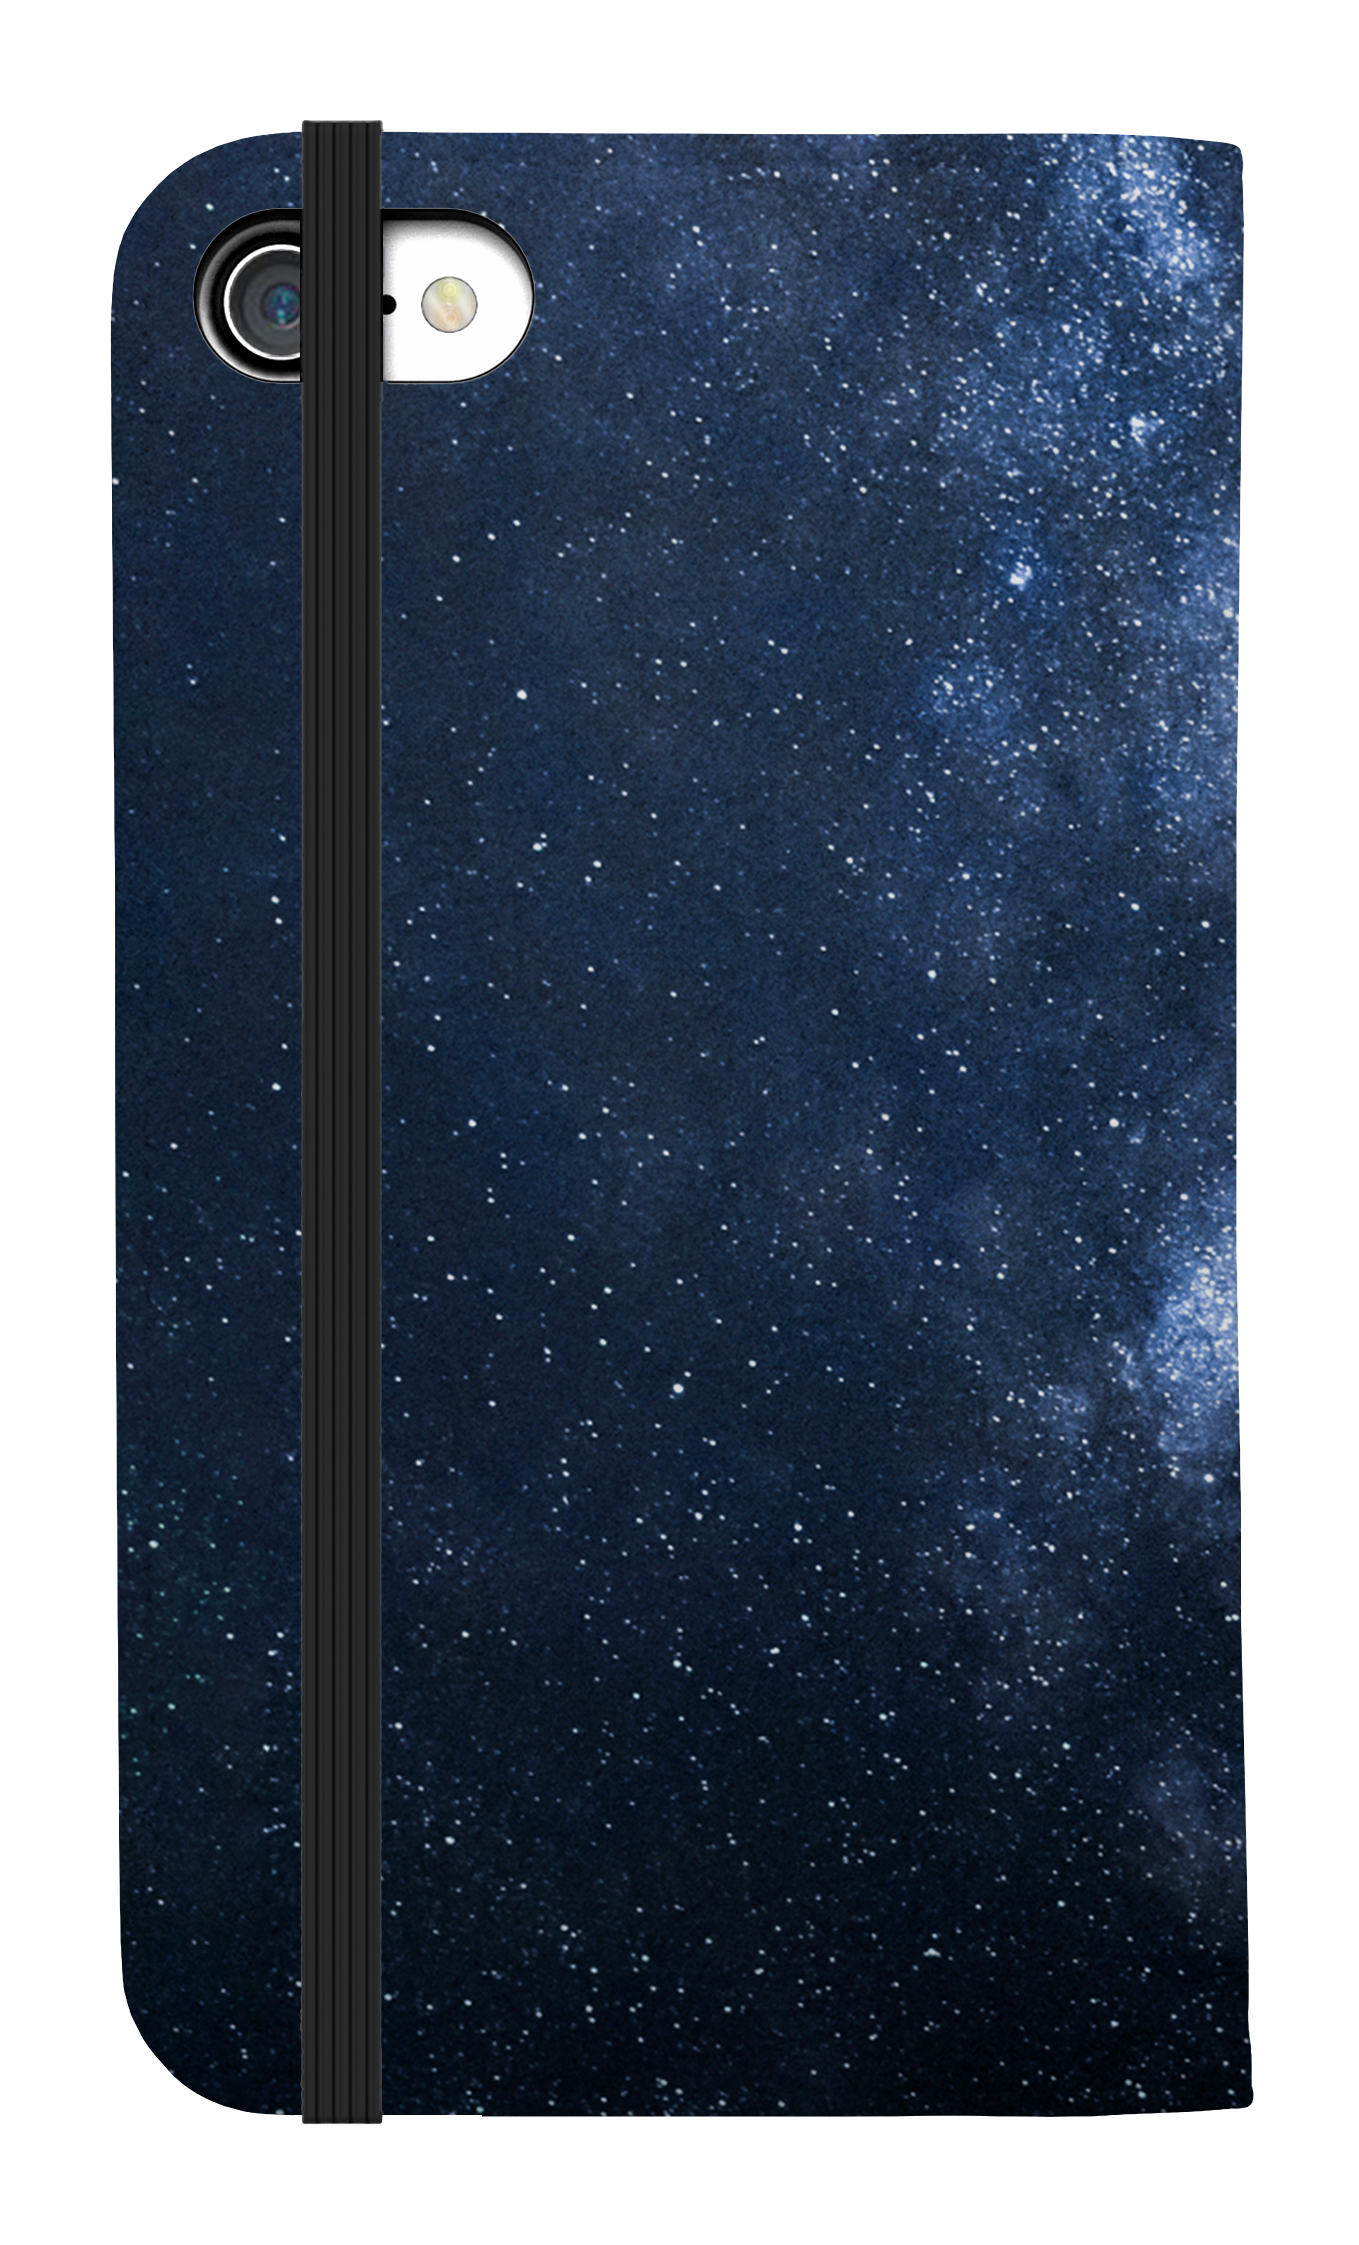 Falcon 9 - Folio Case - iPhone 8